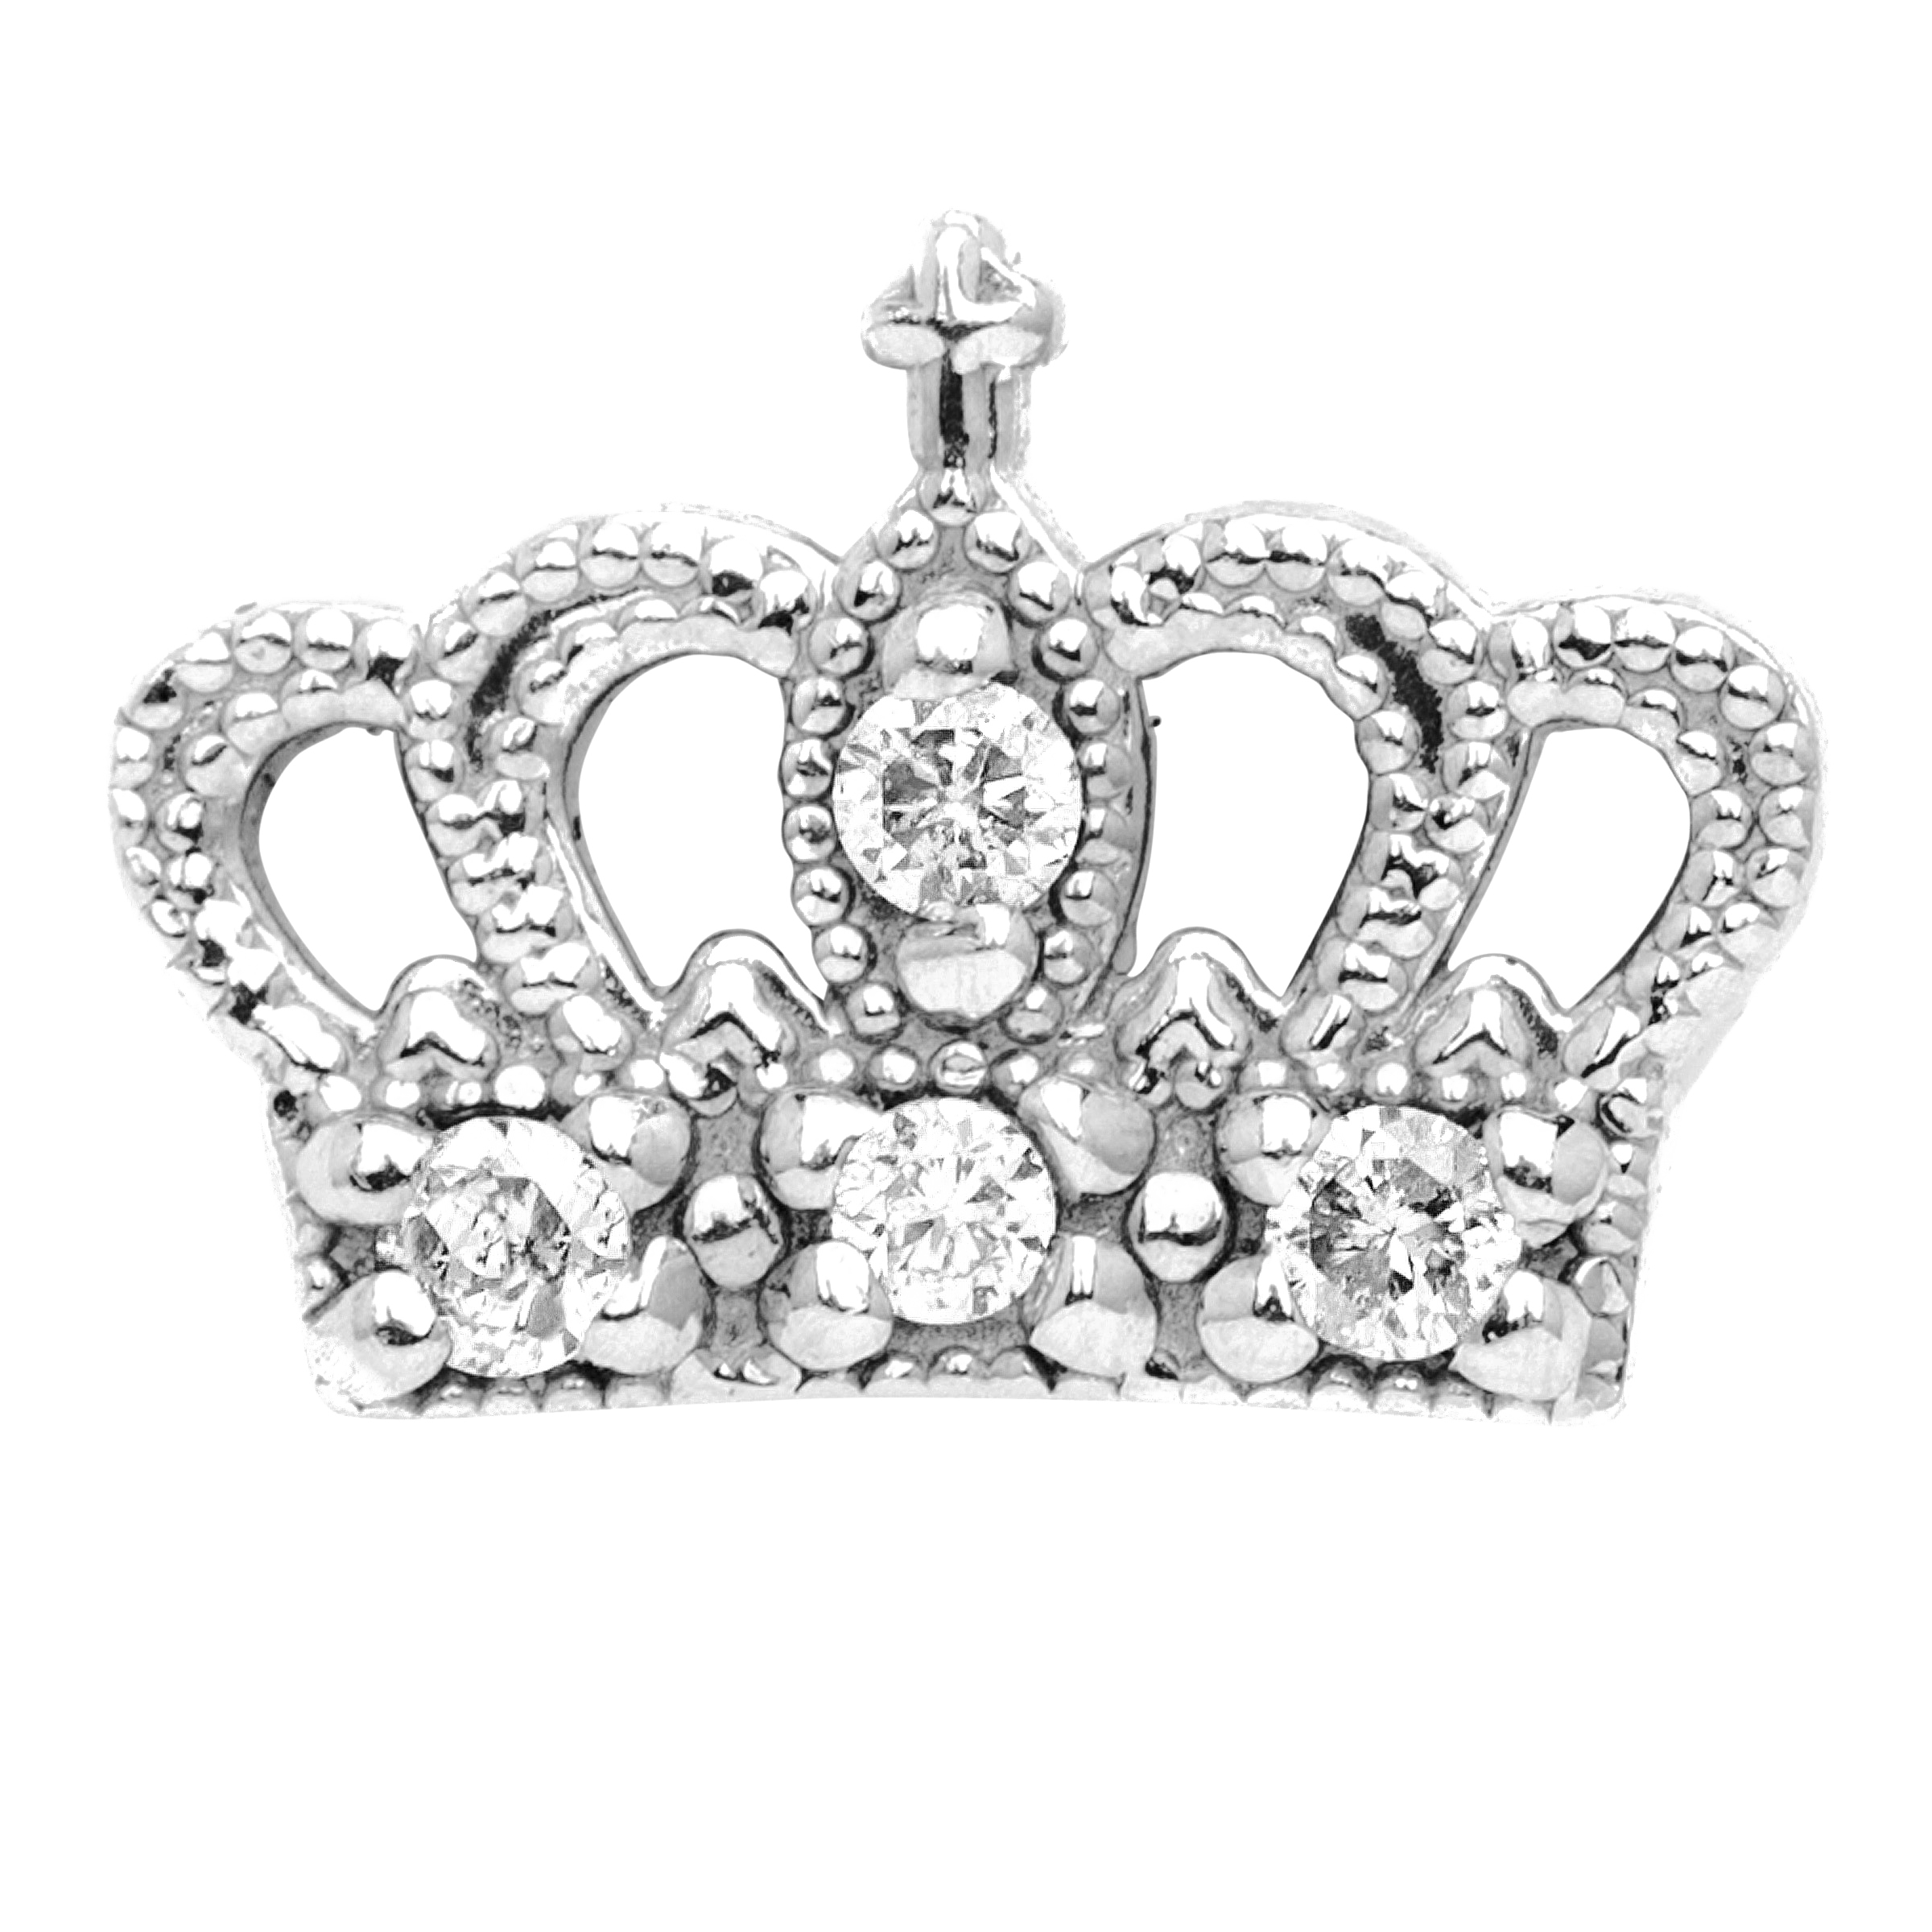 Diamond Crown PNG image